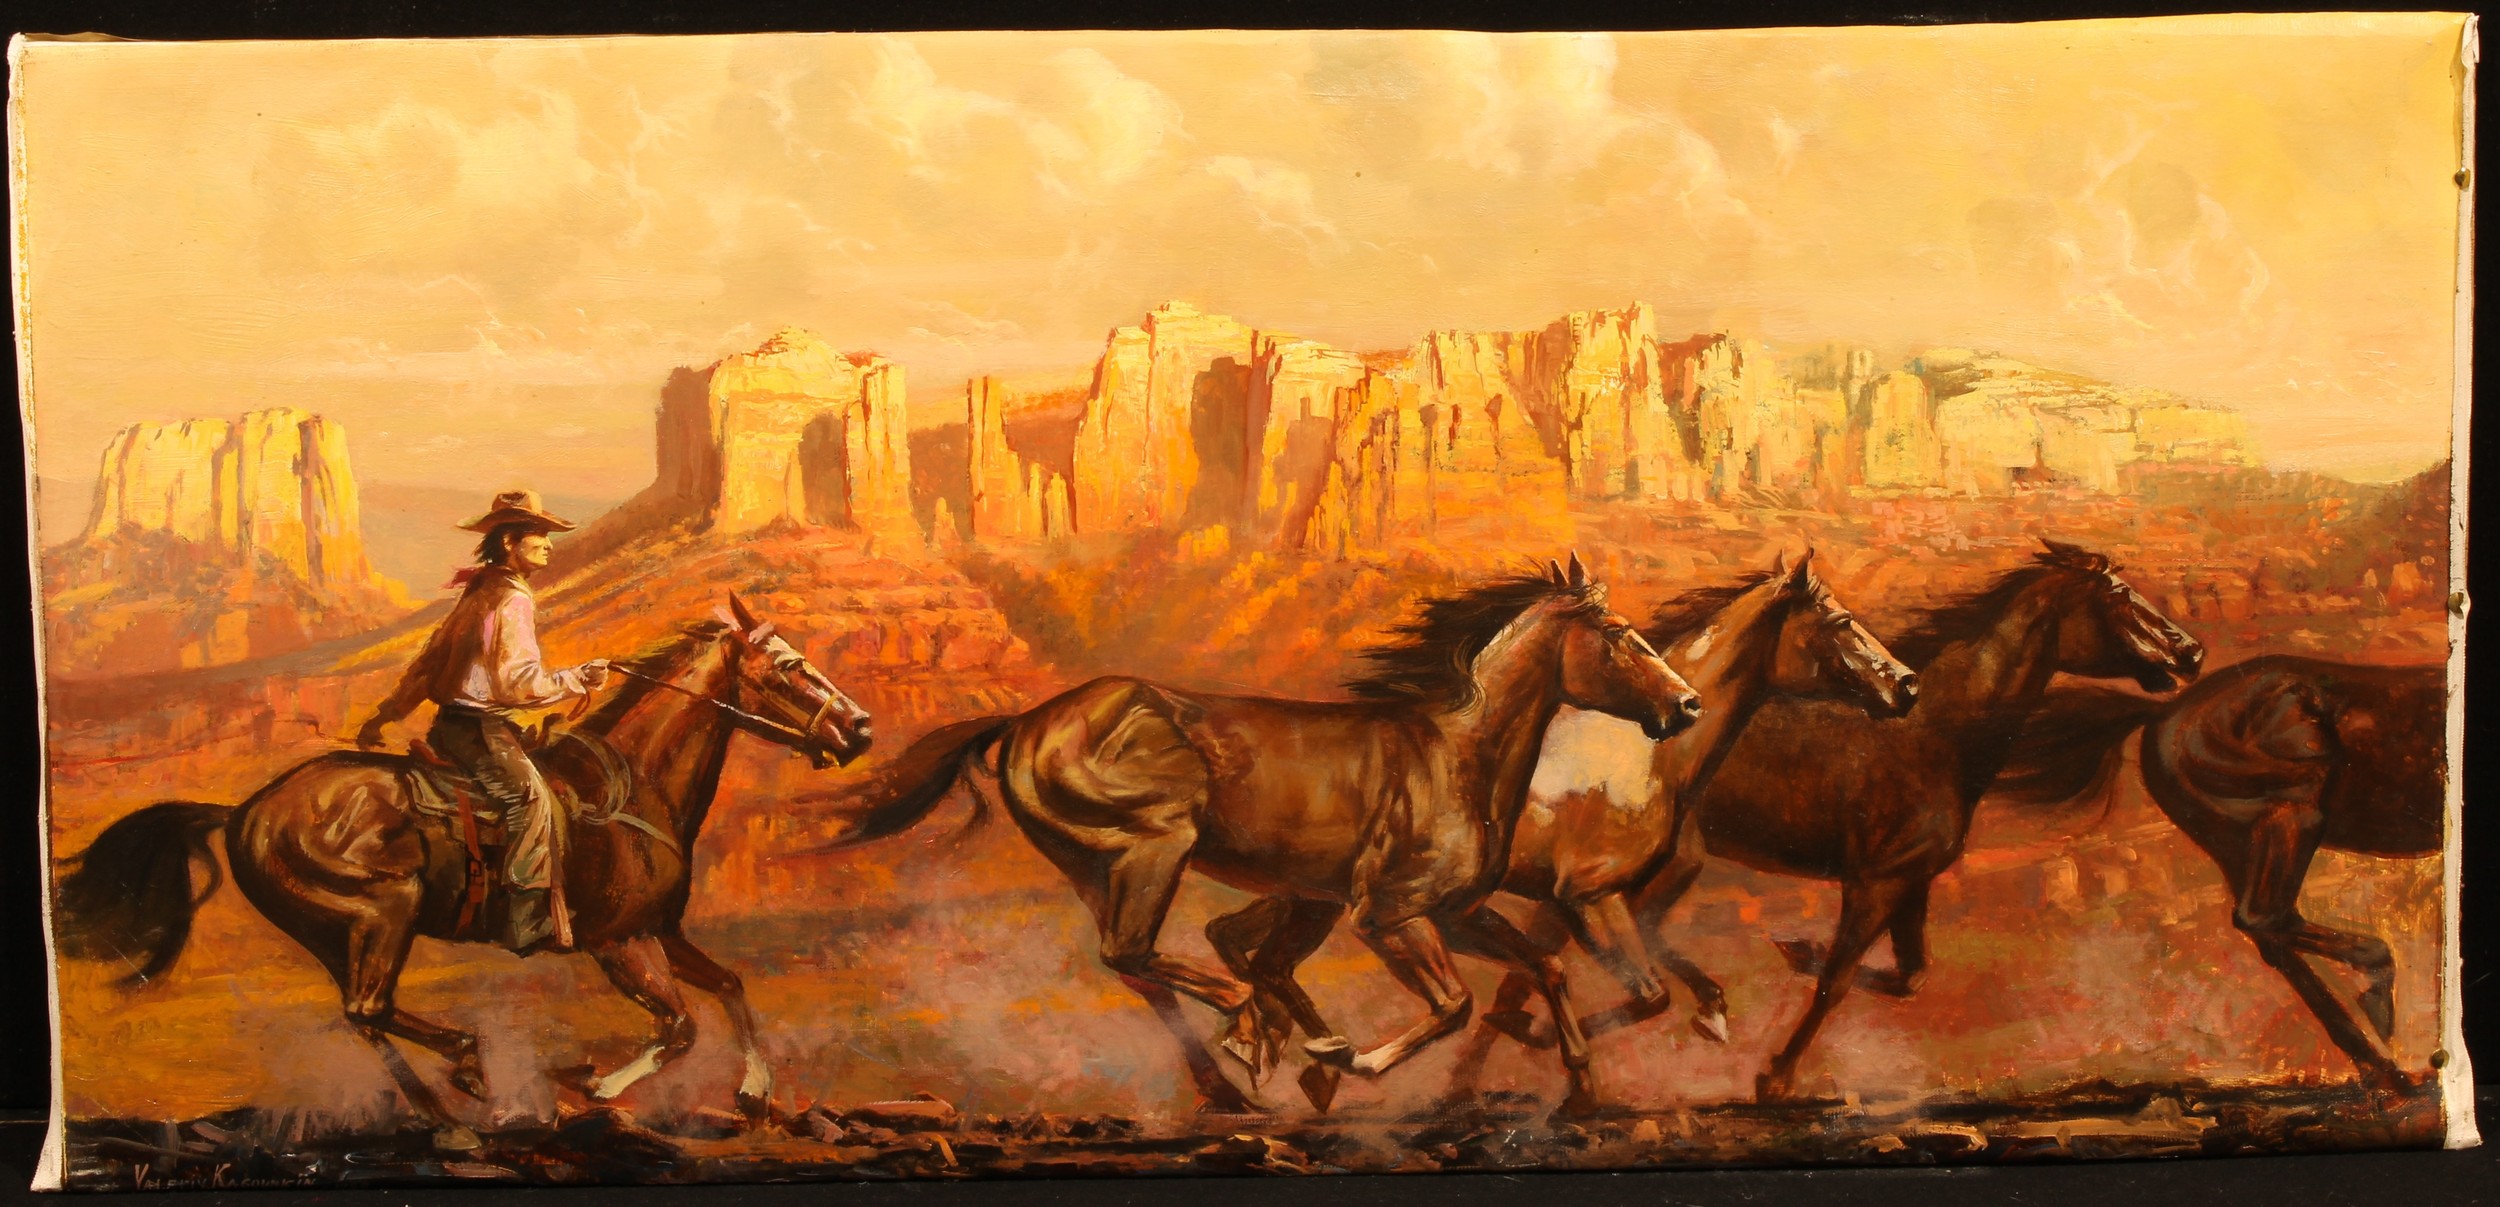 Valeriy Kagounkin (Russian, Bn. 1959) The American West, acrylic on canvas, 60cm x 121cm